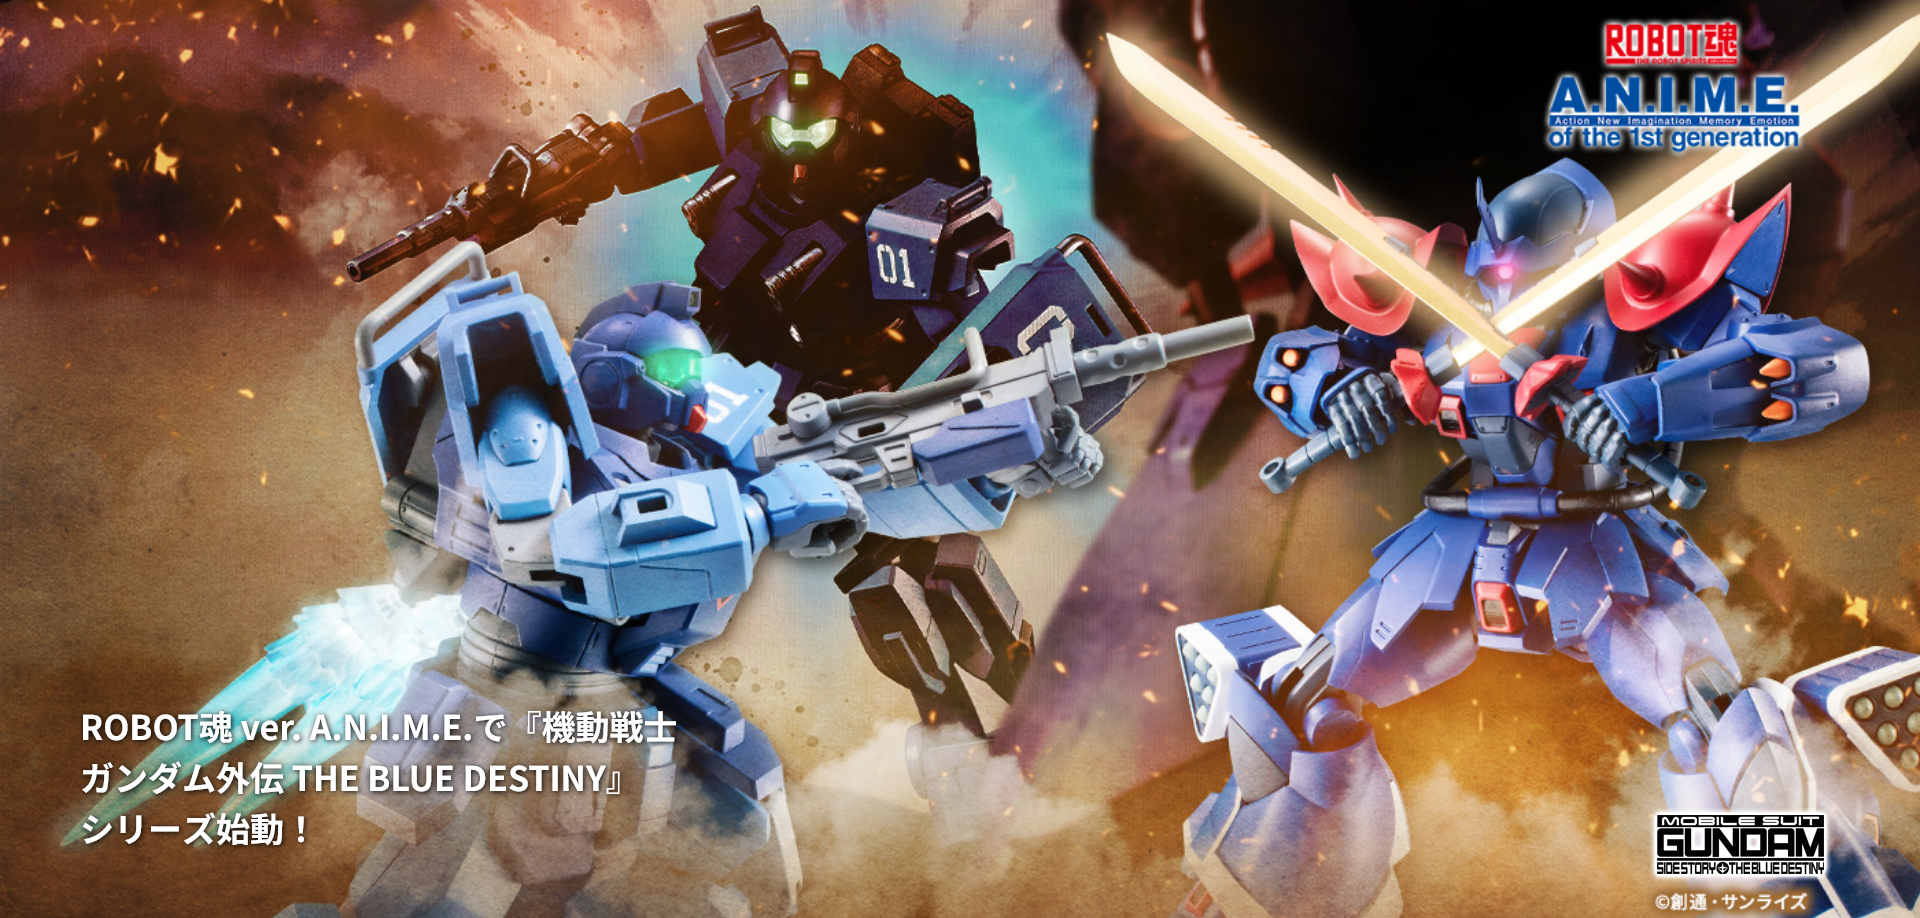 ROBOT SPIRITS ver. A.N.I.M.E. The "Mobile Suit Gundam Gaiden THE BLUE DESTINY" series begins at